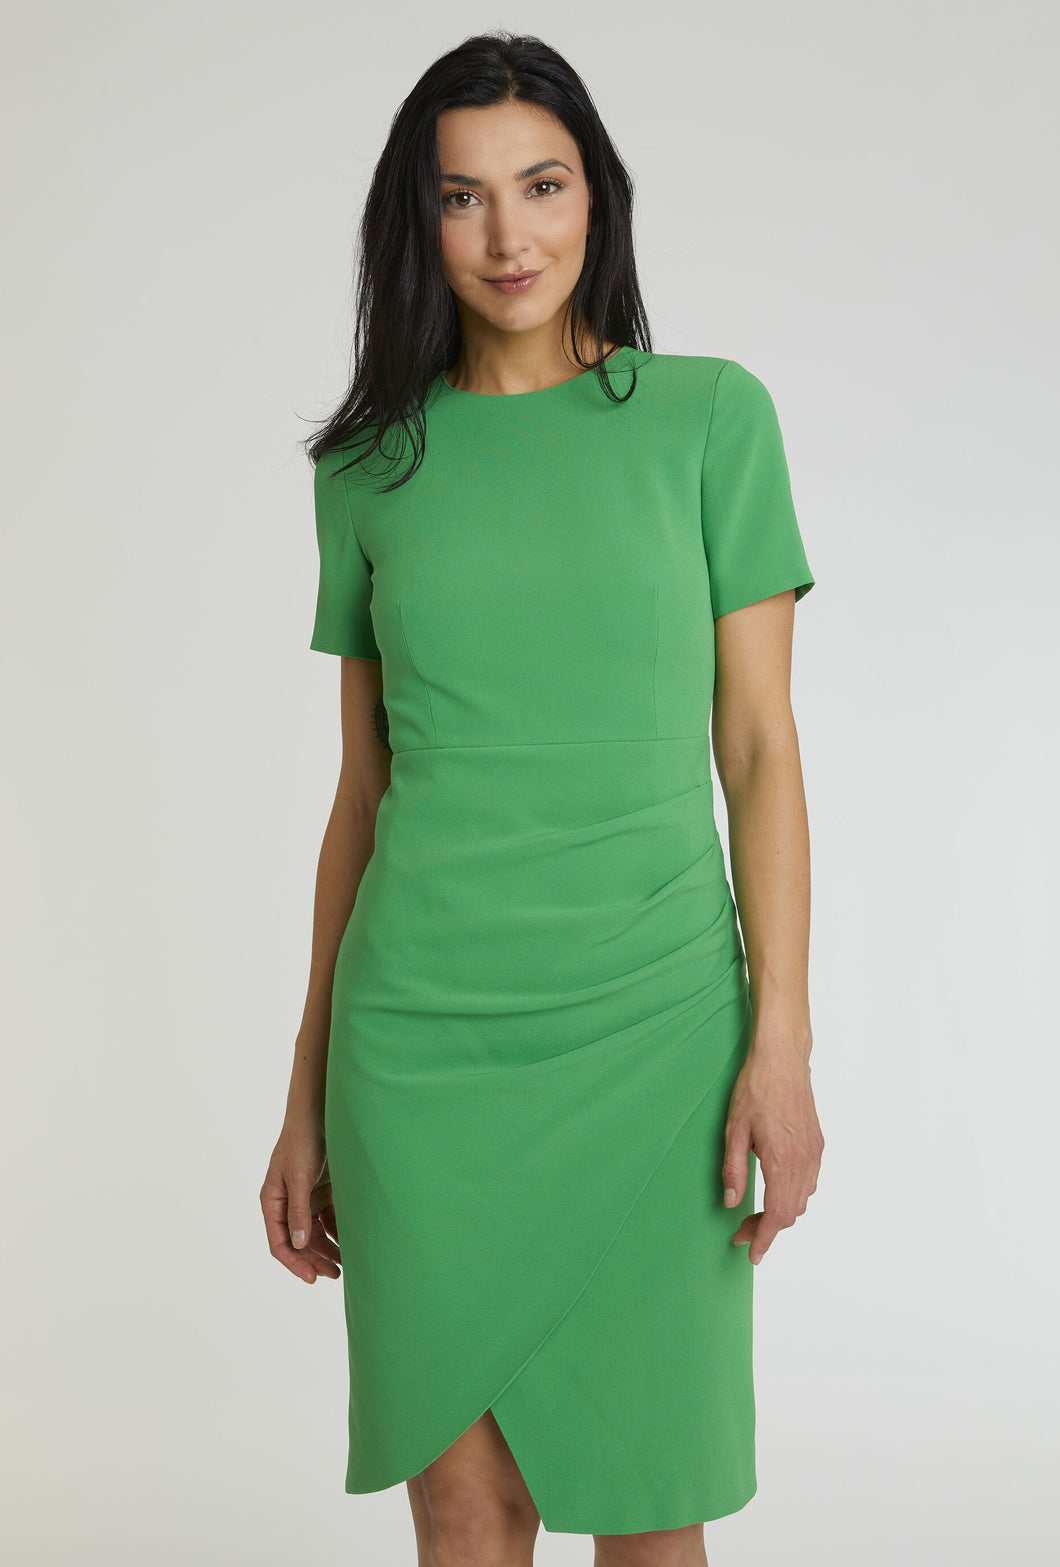 paule-ka-draped-detail-green-crepe-dress